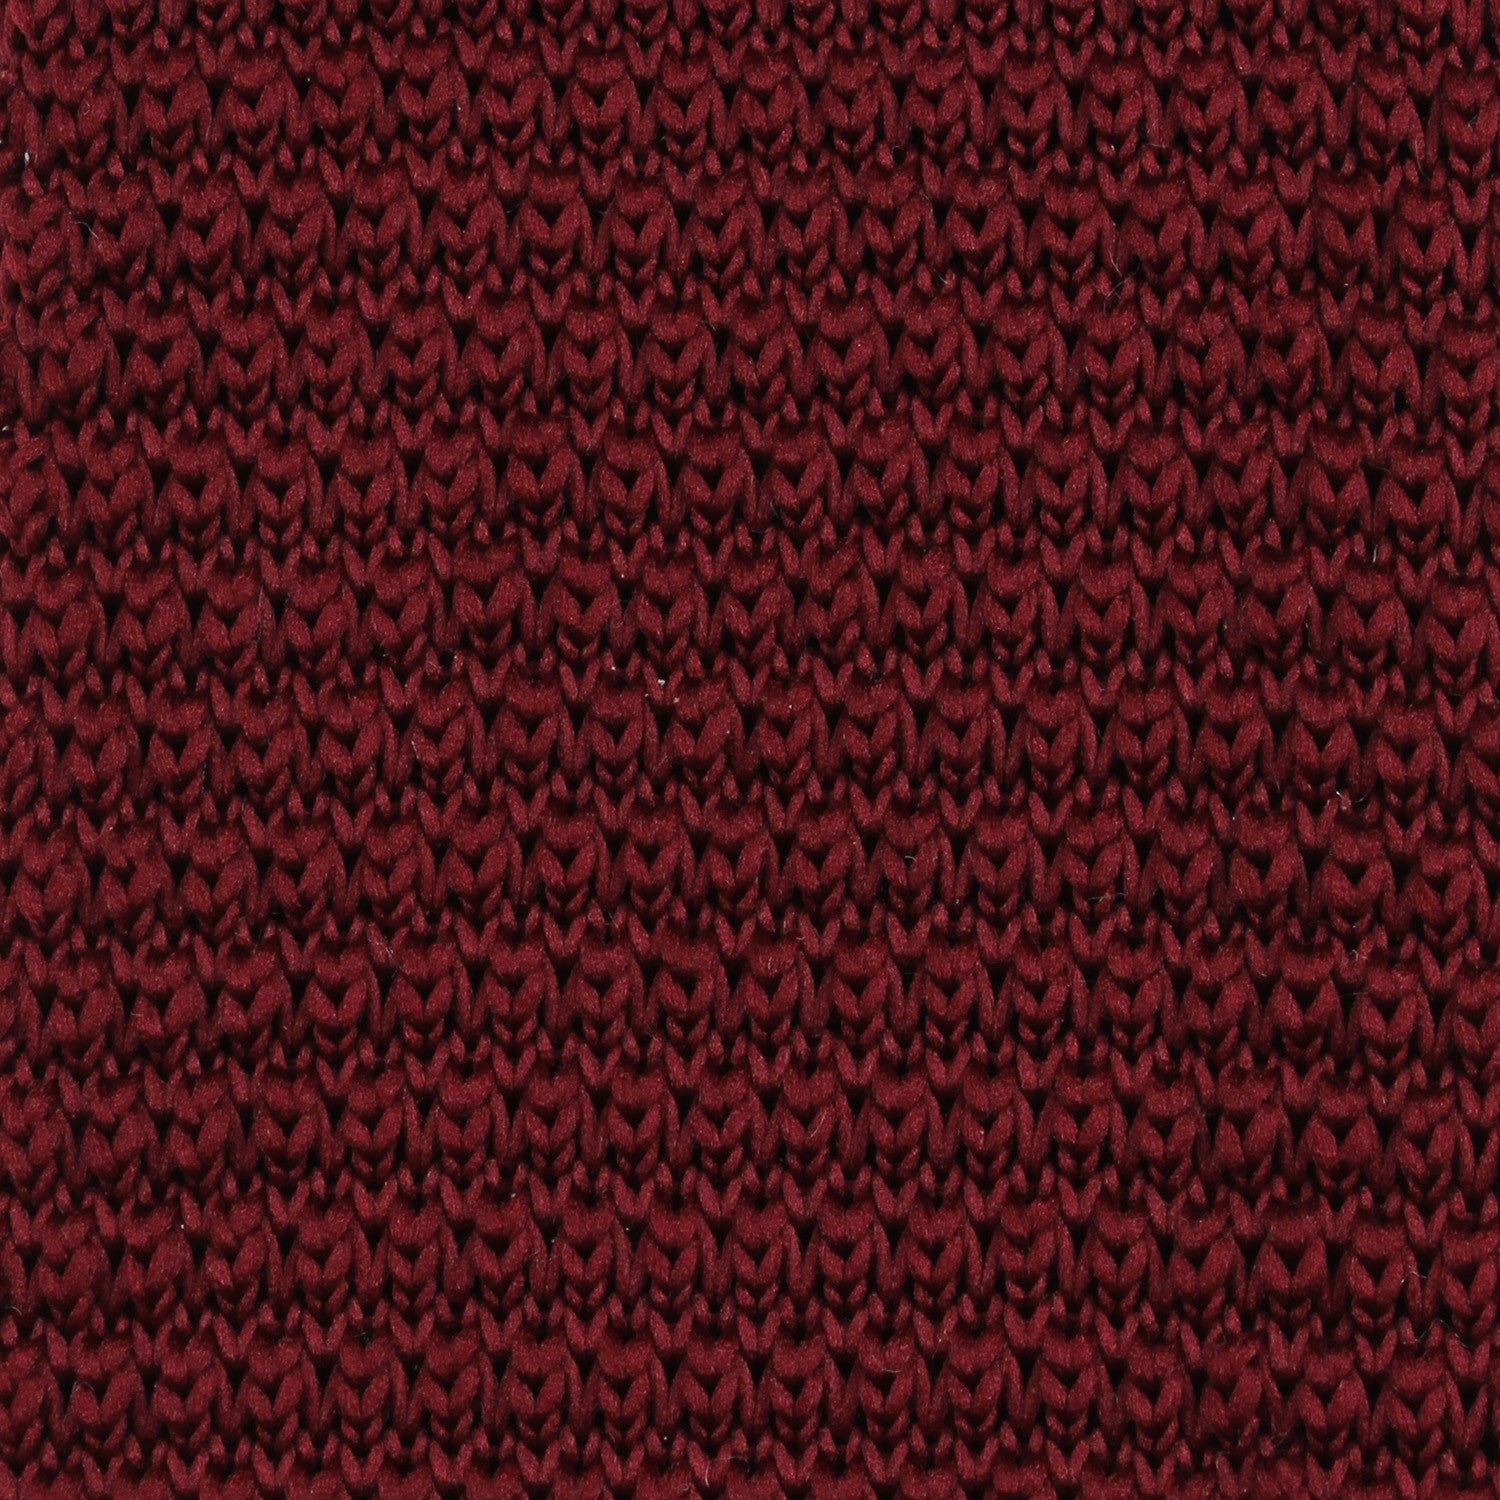 Dark Rosewood Maroon Pointed Knitted Tie Detail View